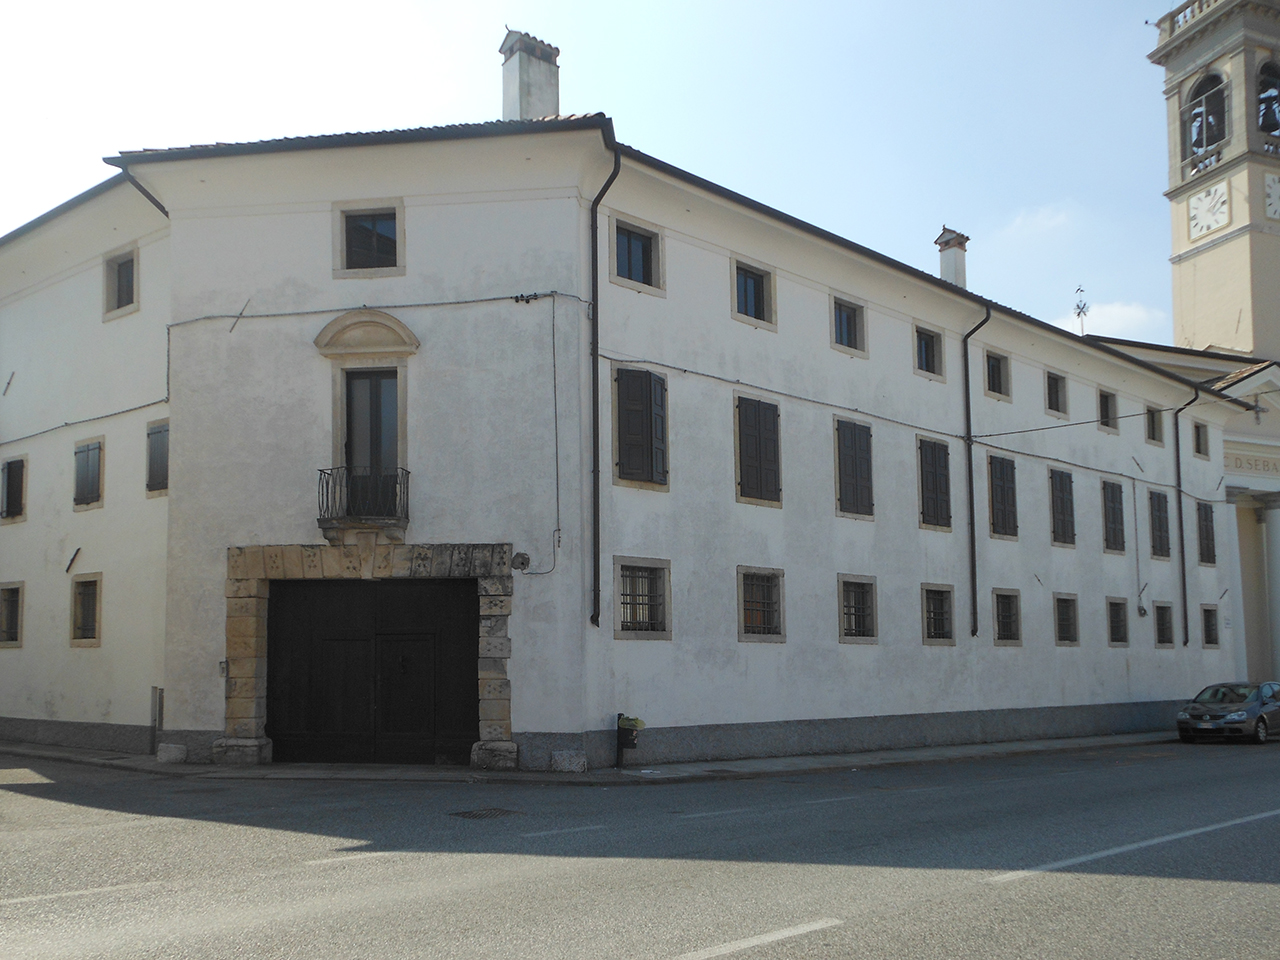 Casa Fabris, Zancani (casa, rurale) - Dignano (UD) 